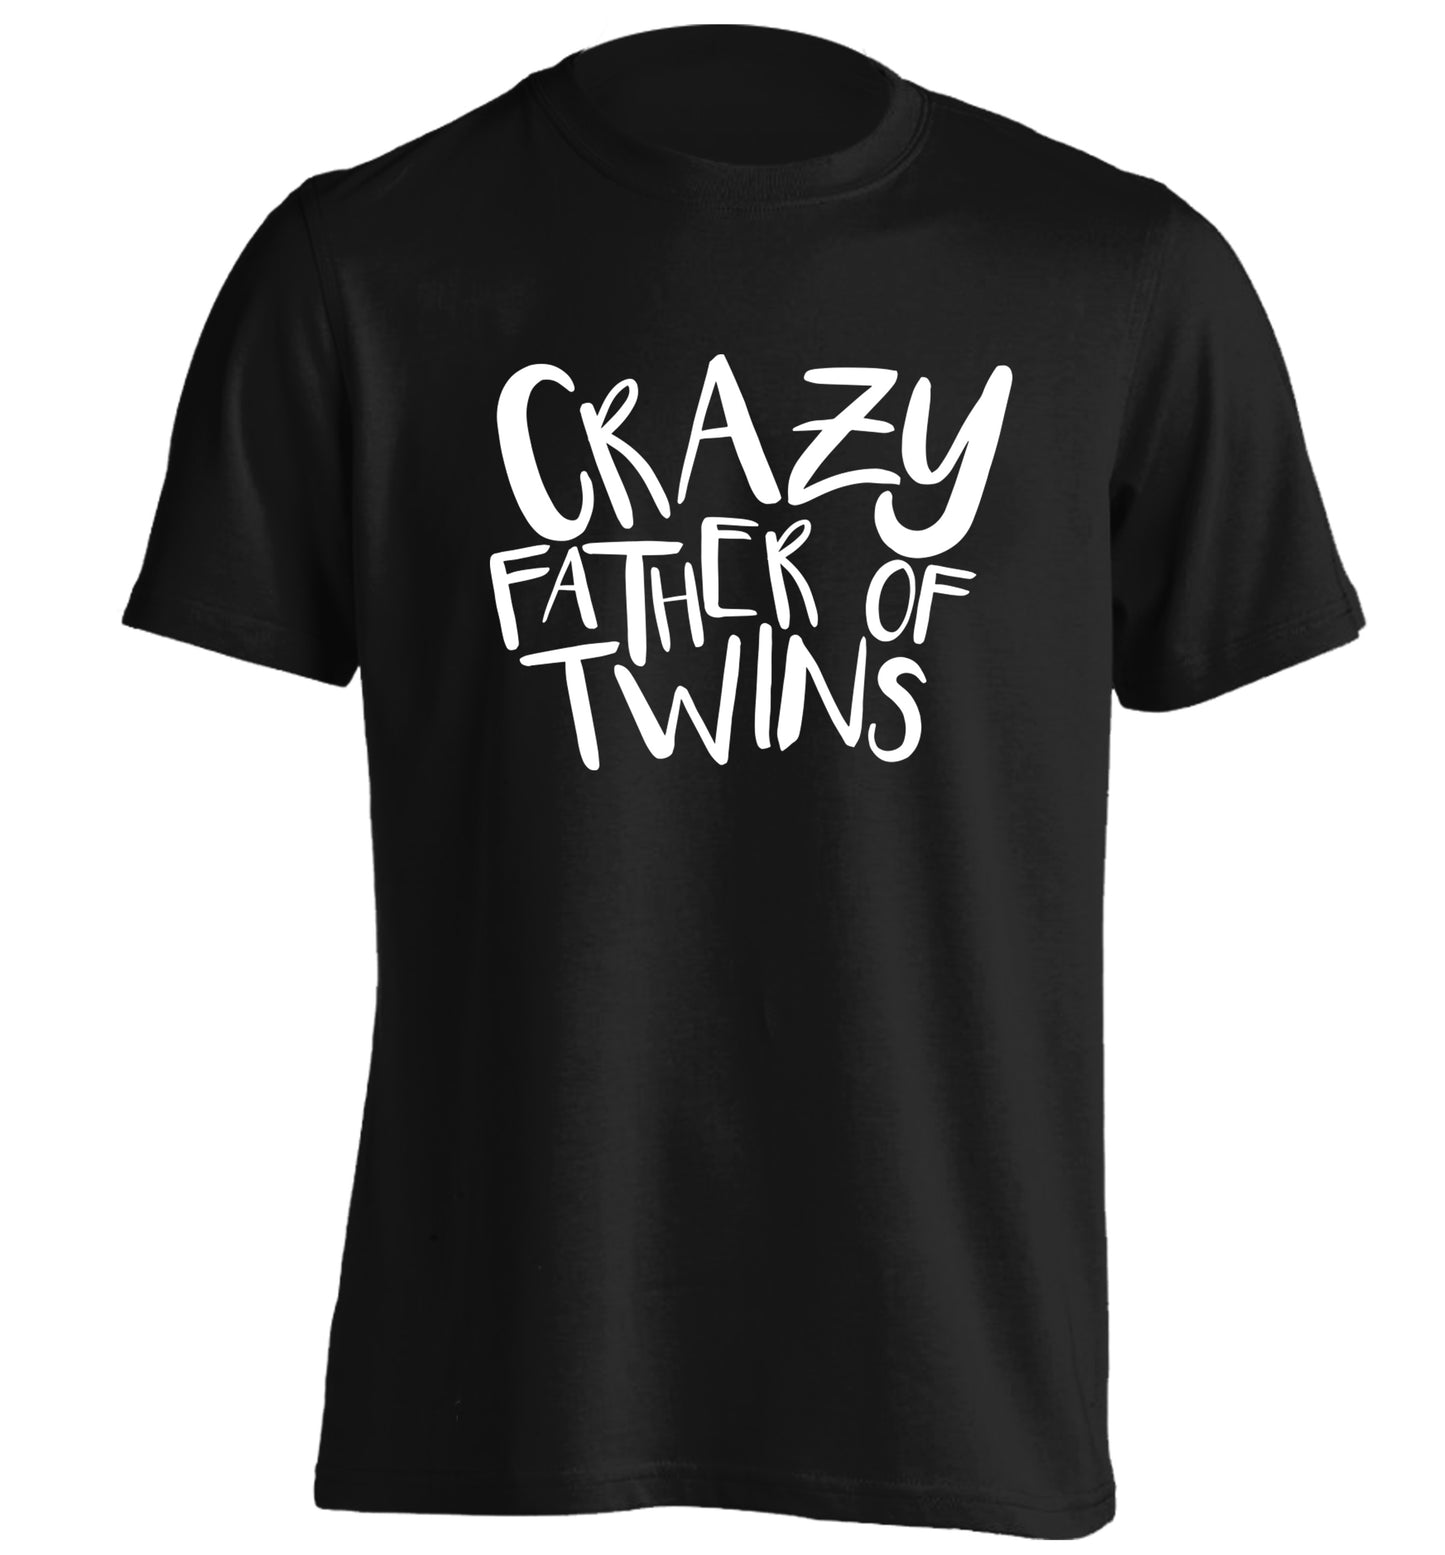 Crazy father of twins adults unisex black Tshirt 2XL